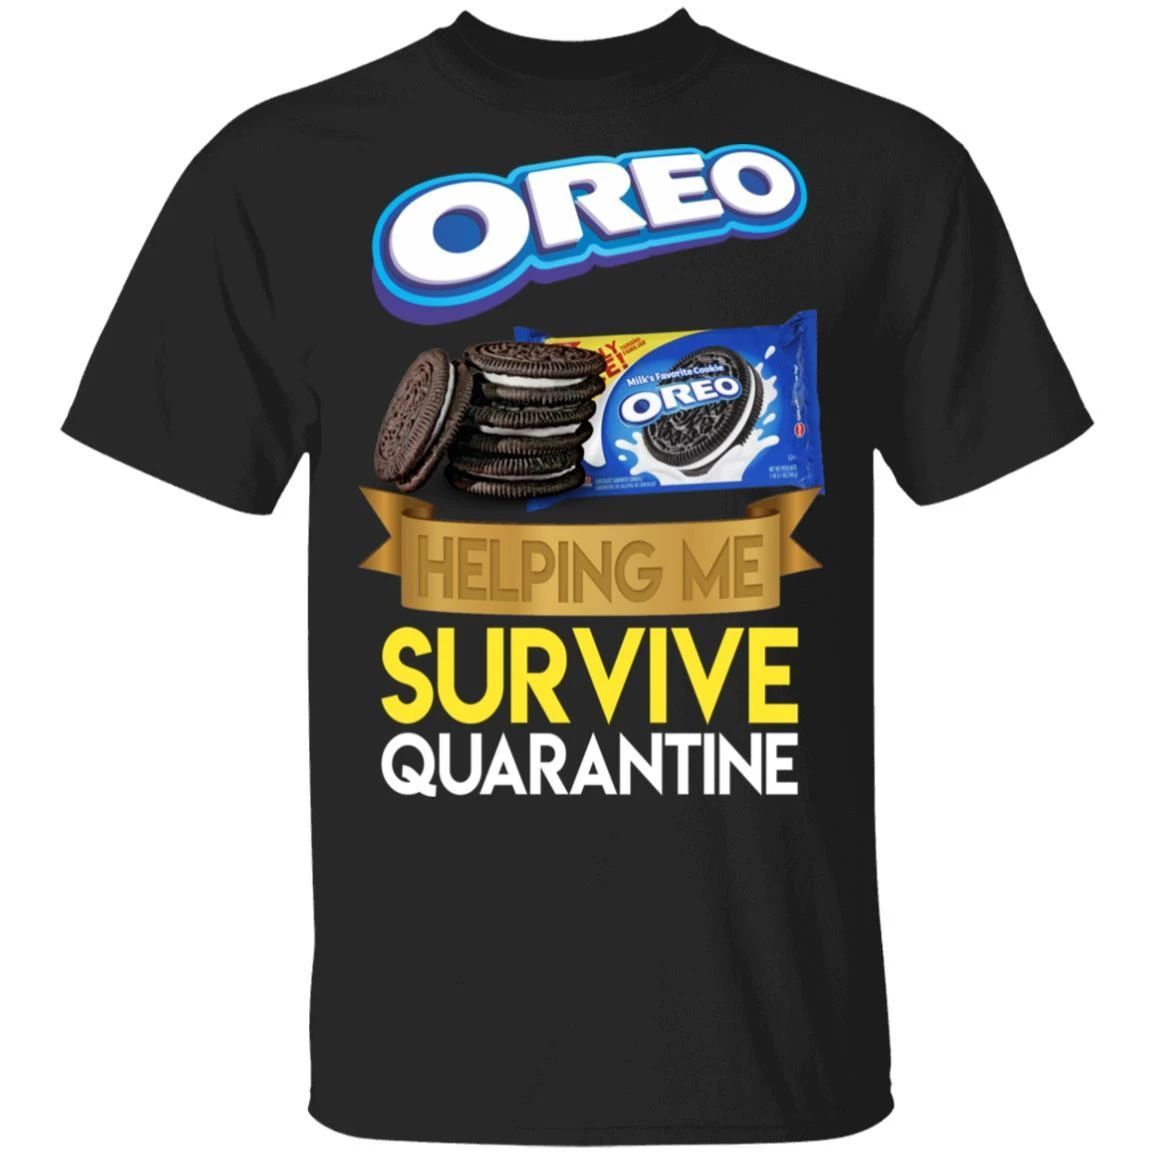 Oreo Helping Me Survive Quarantine T-shirt